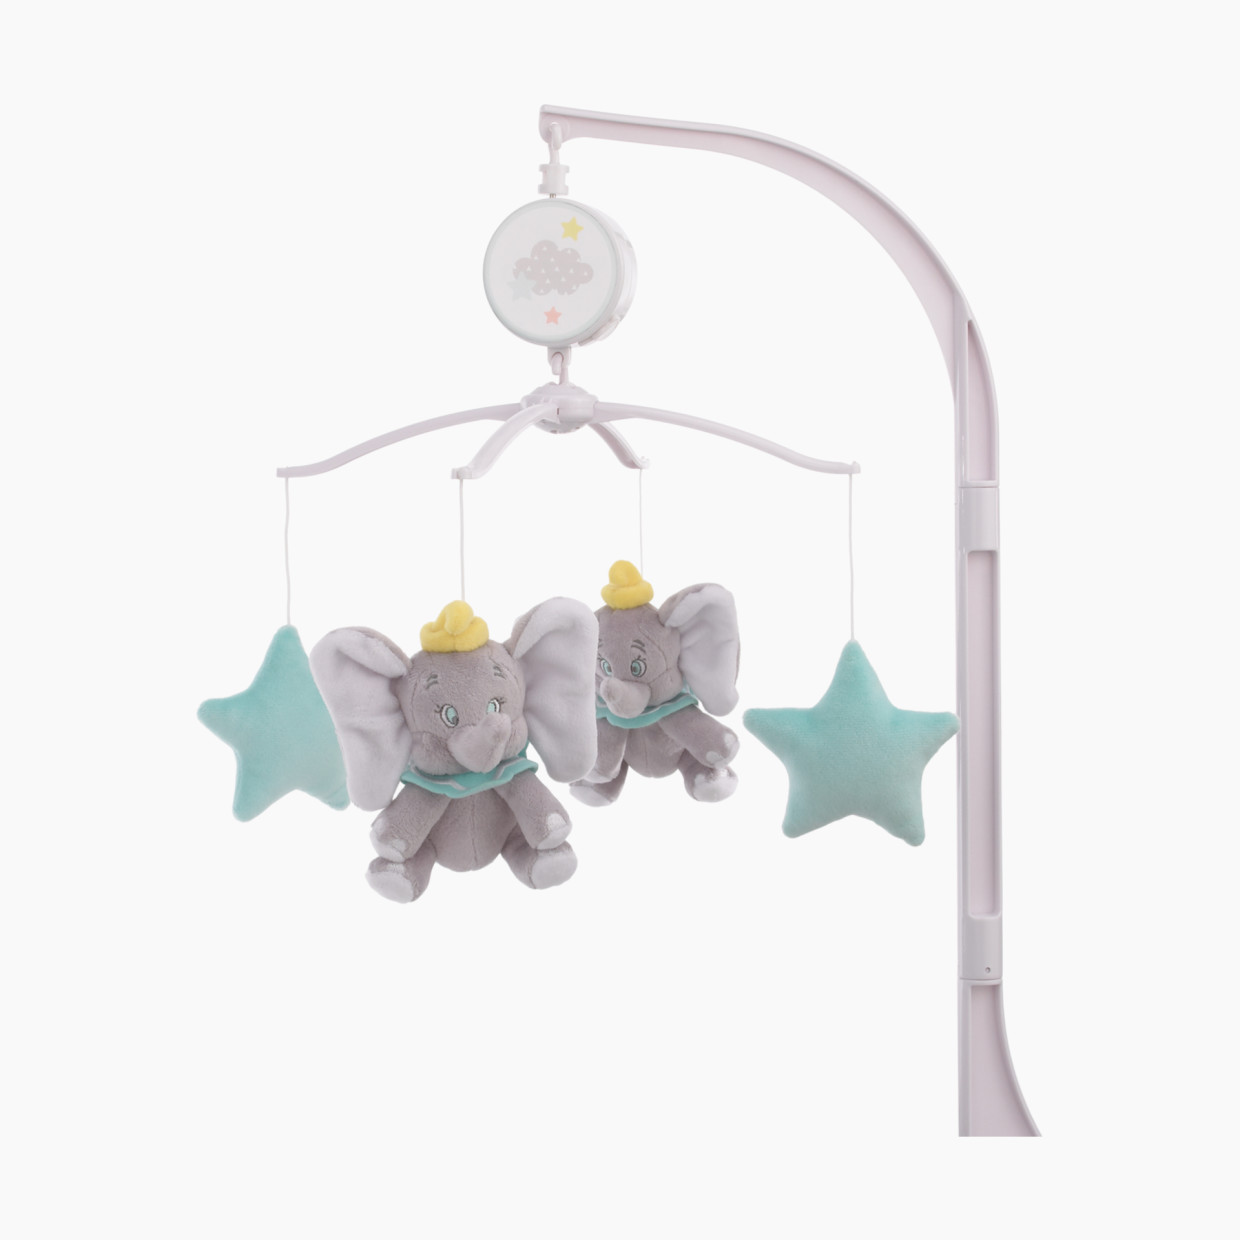 NoJo Baby Nursery Musical Mobile - Dumbo.